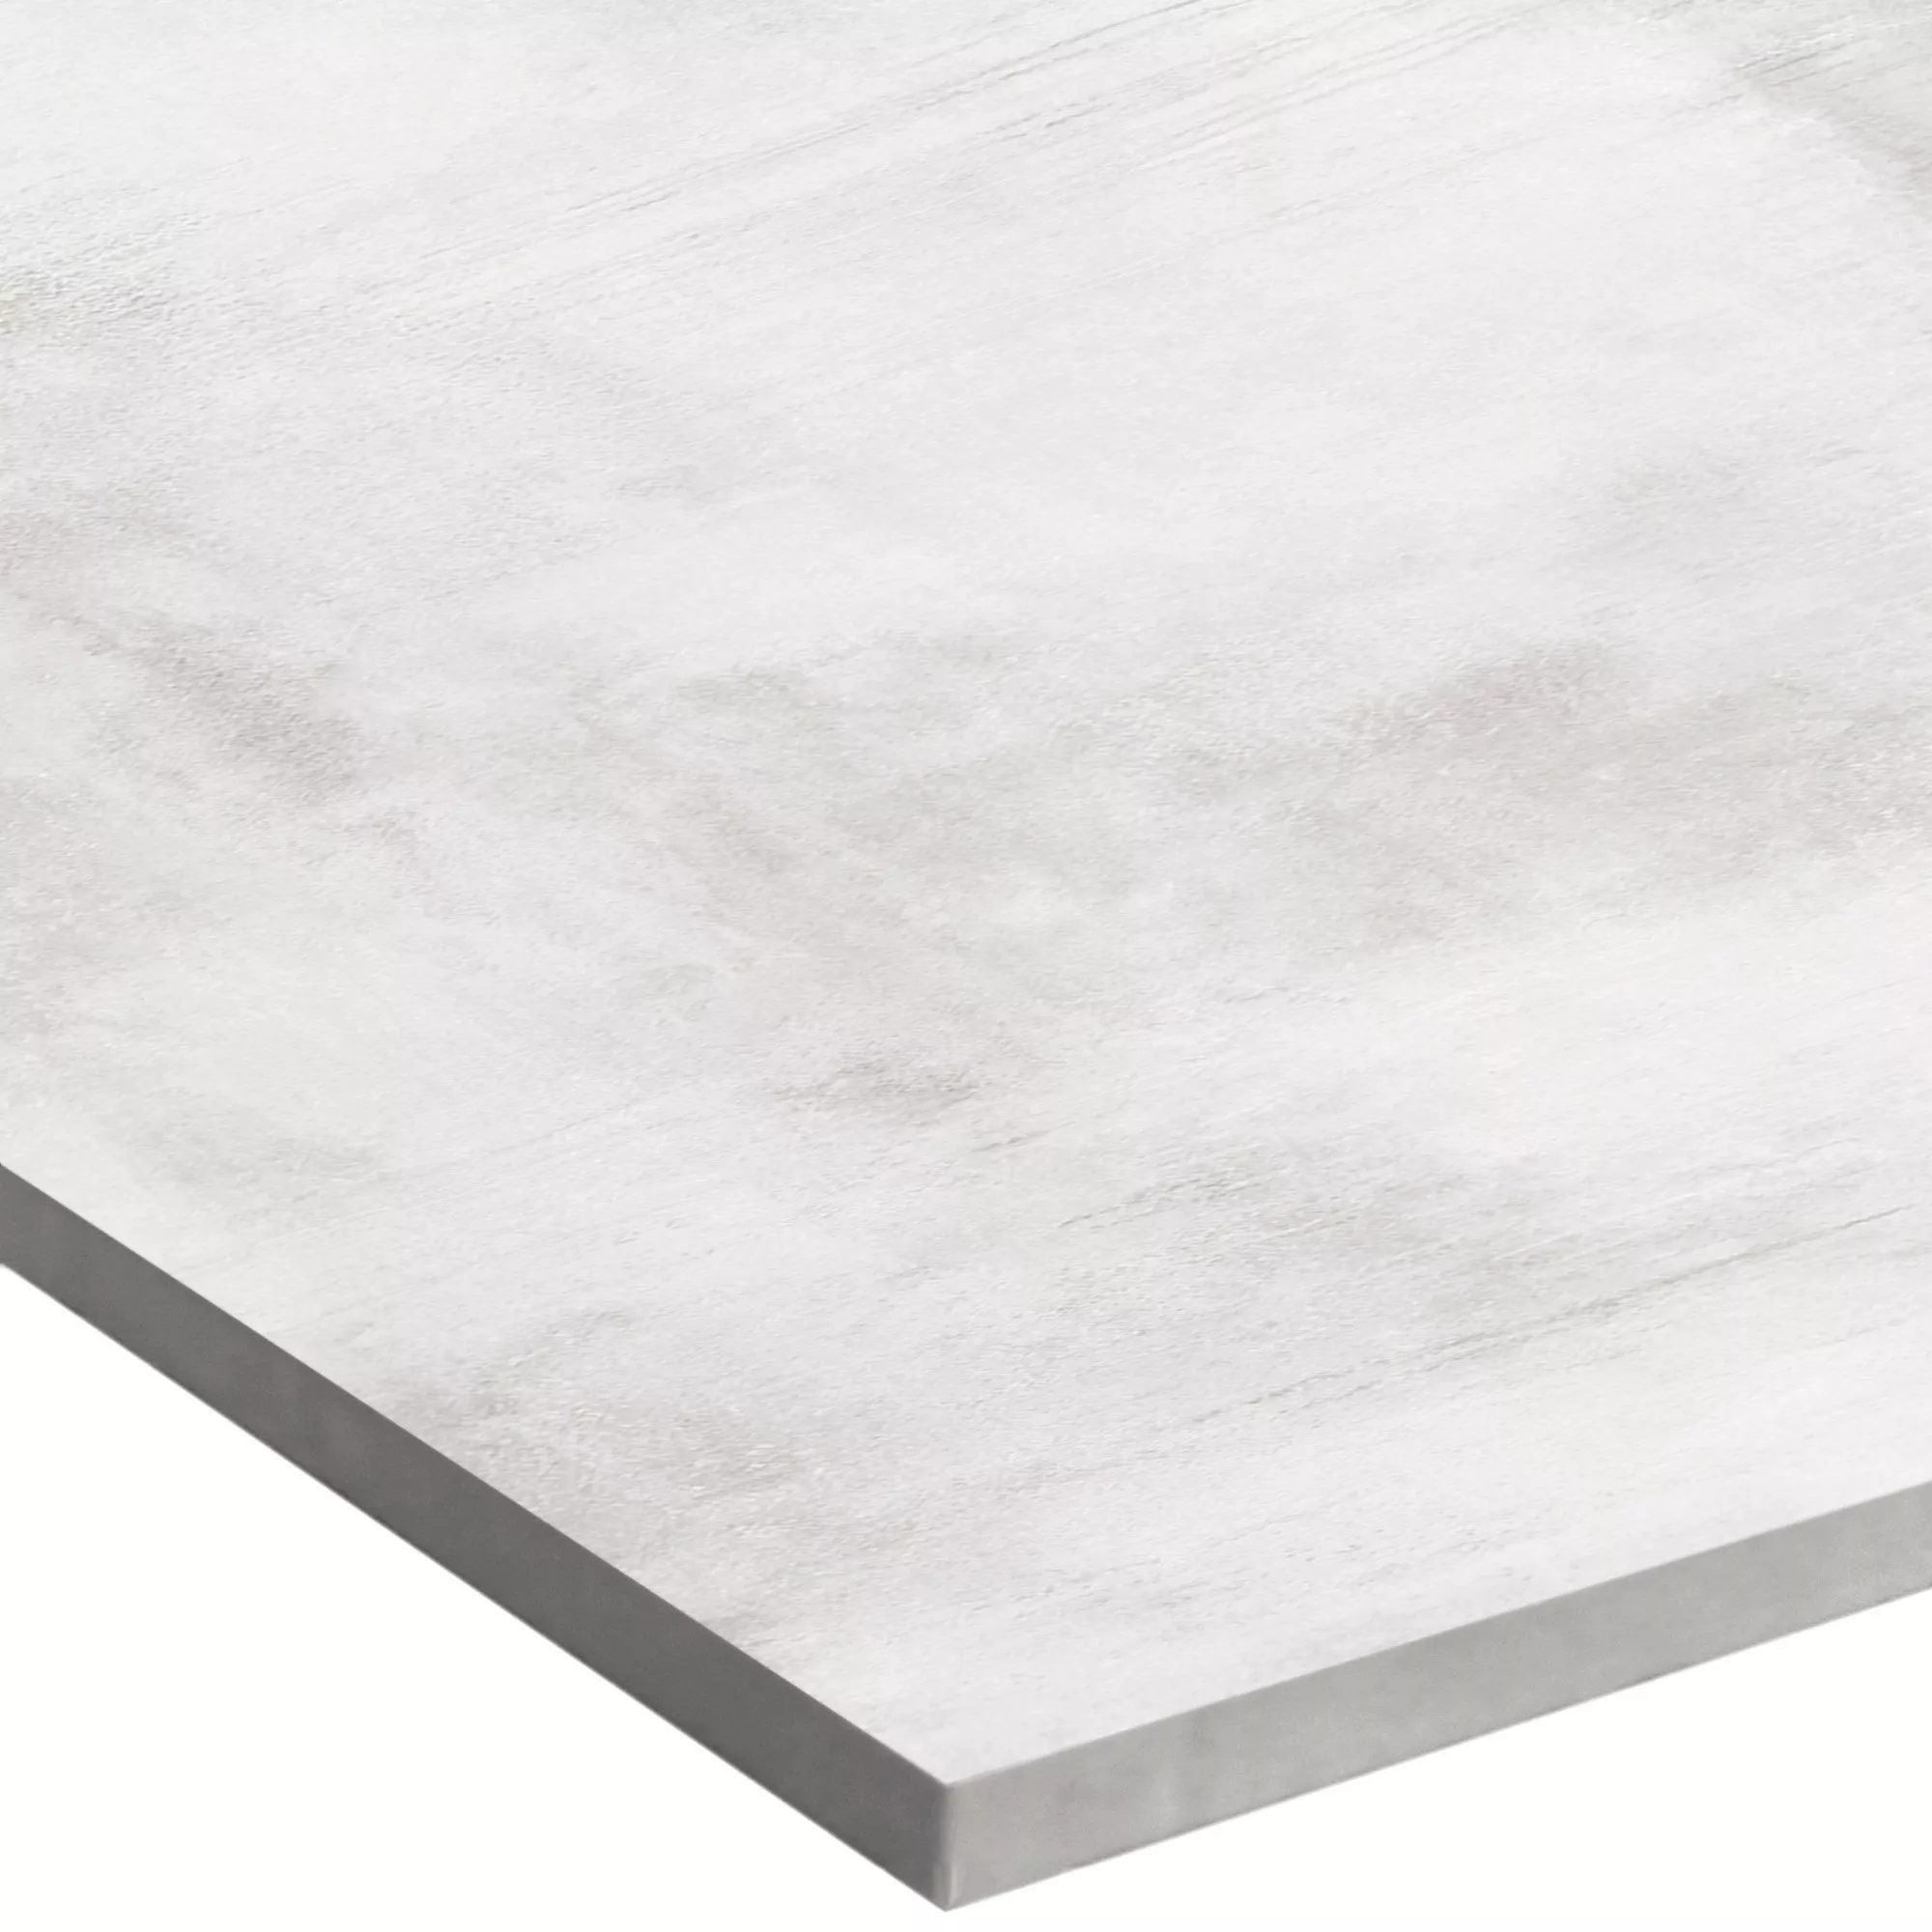 Vzorek Podlahové Dlaždice Tycoon Betonový Vzhled R10 Stříbrná 120x120cm